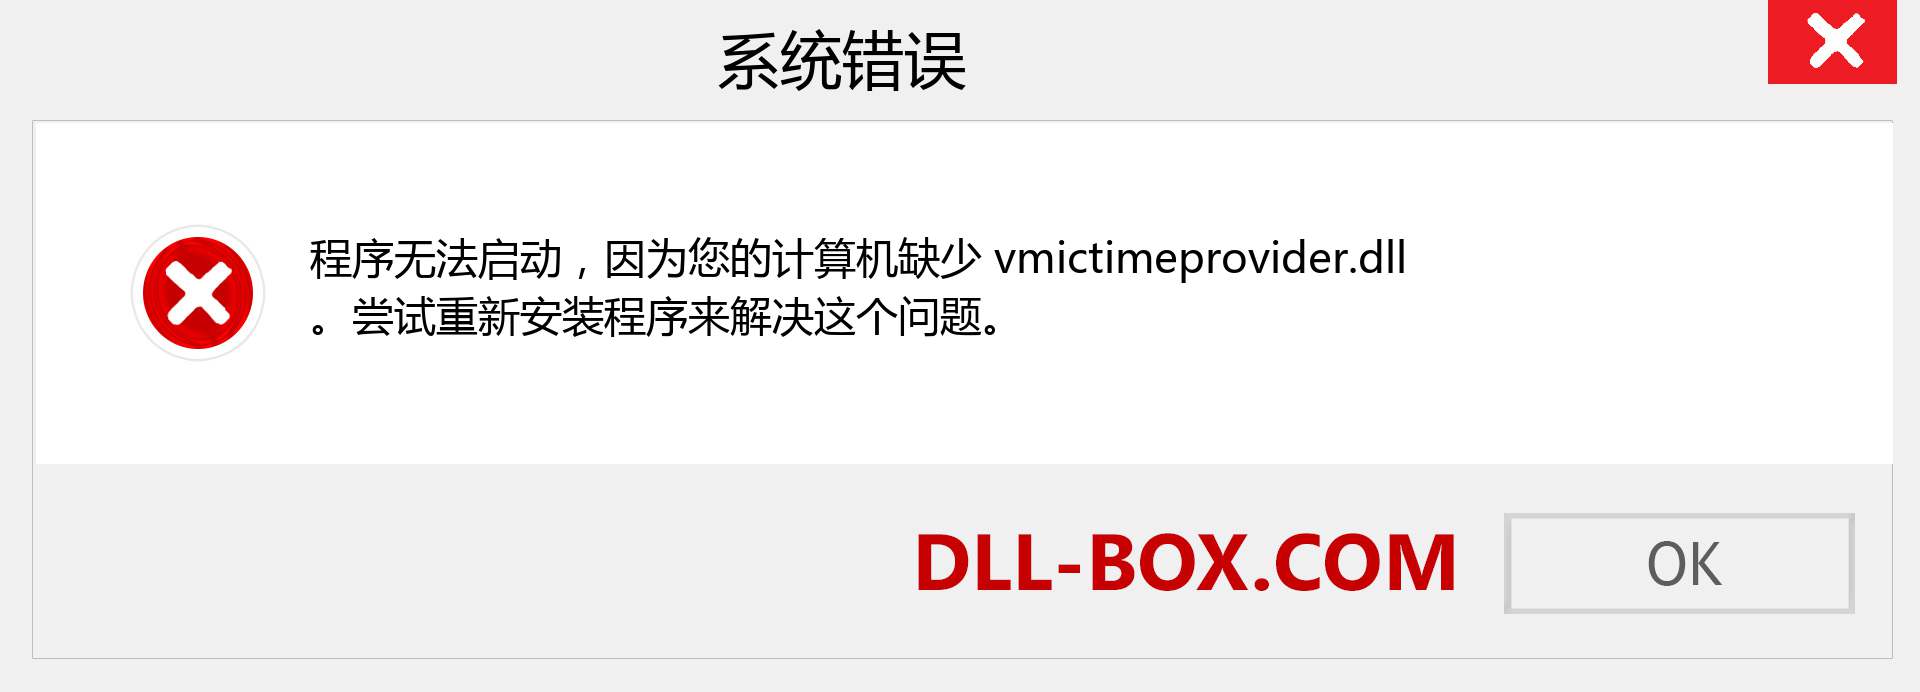 vmictimeprovider.dll 文件丢失？。 适用于 Windows 7、8、10 的下载 - 修复 Windows、照片、图像上的 vmictimeprovider dll 丢失错误